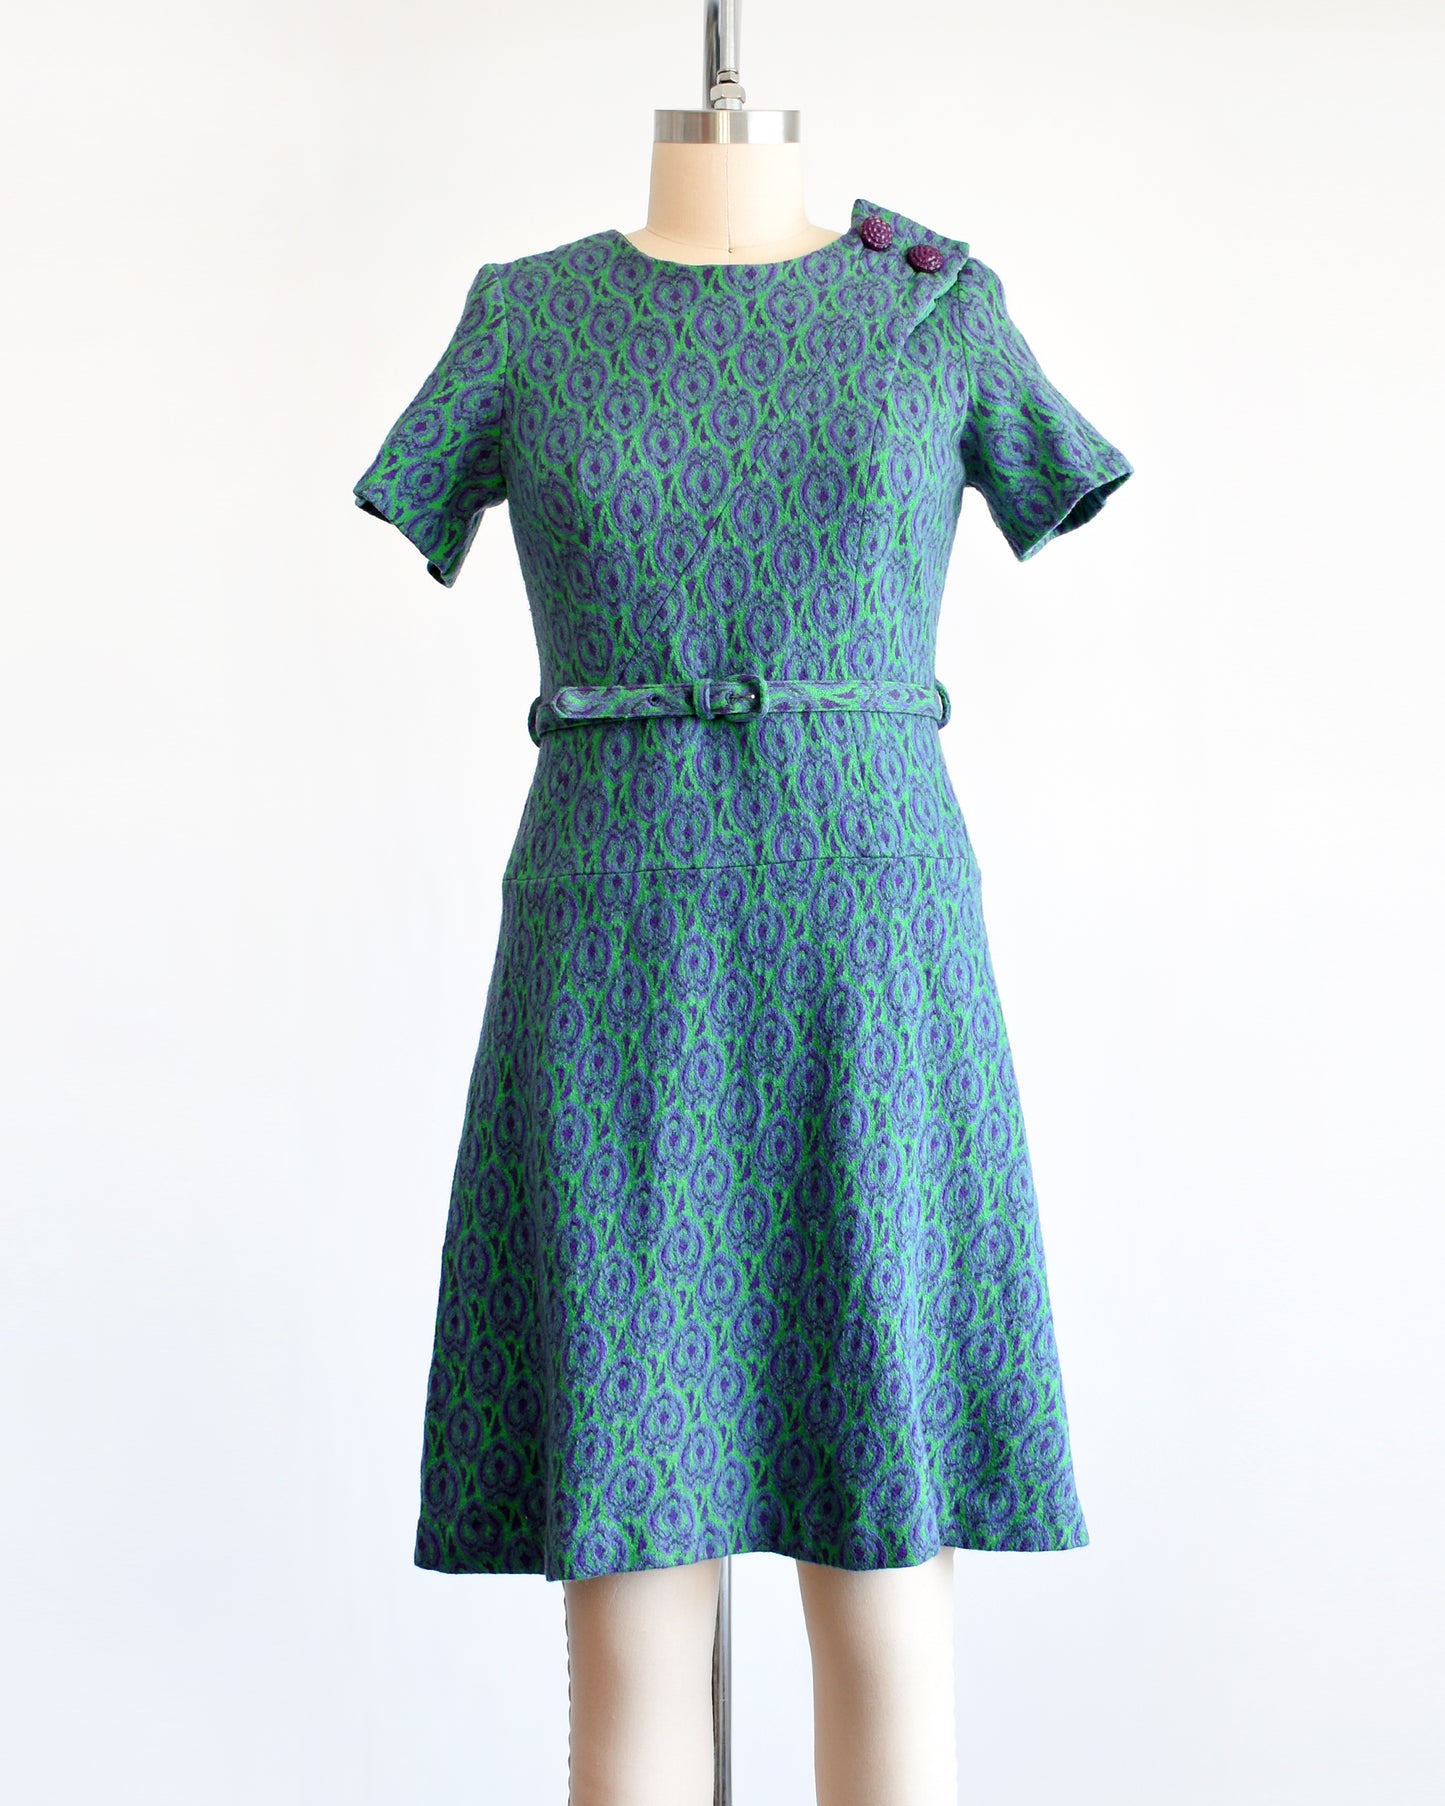 a vintage 1960s green and purple drop waist dress and matching belt